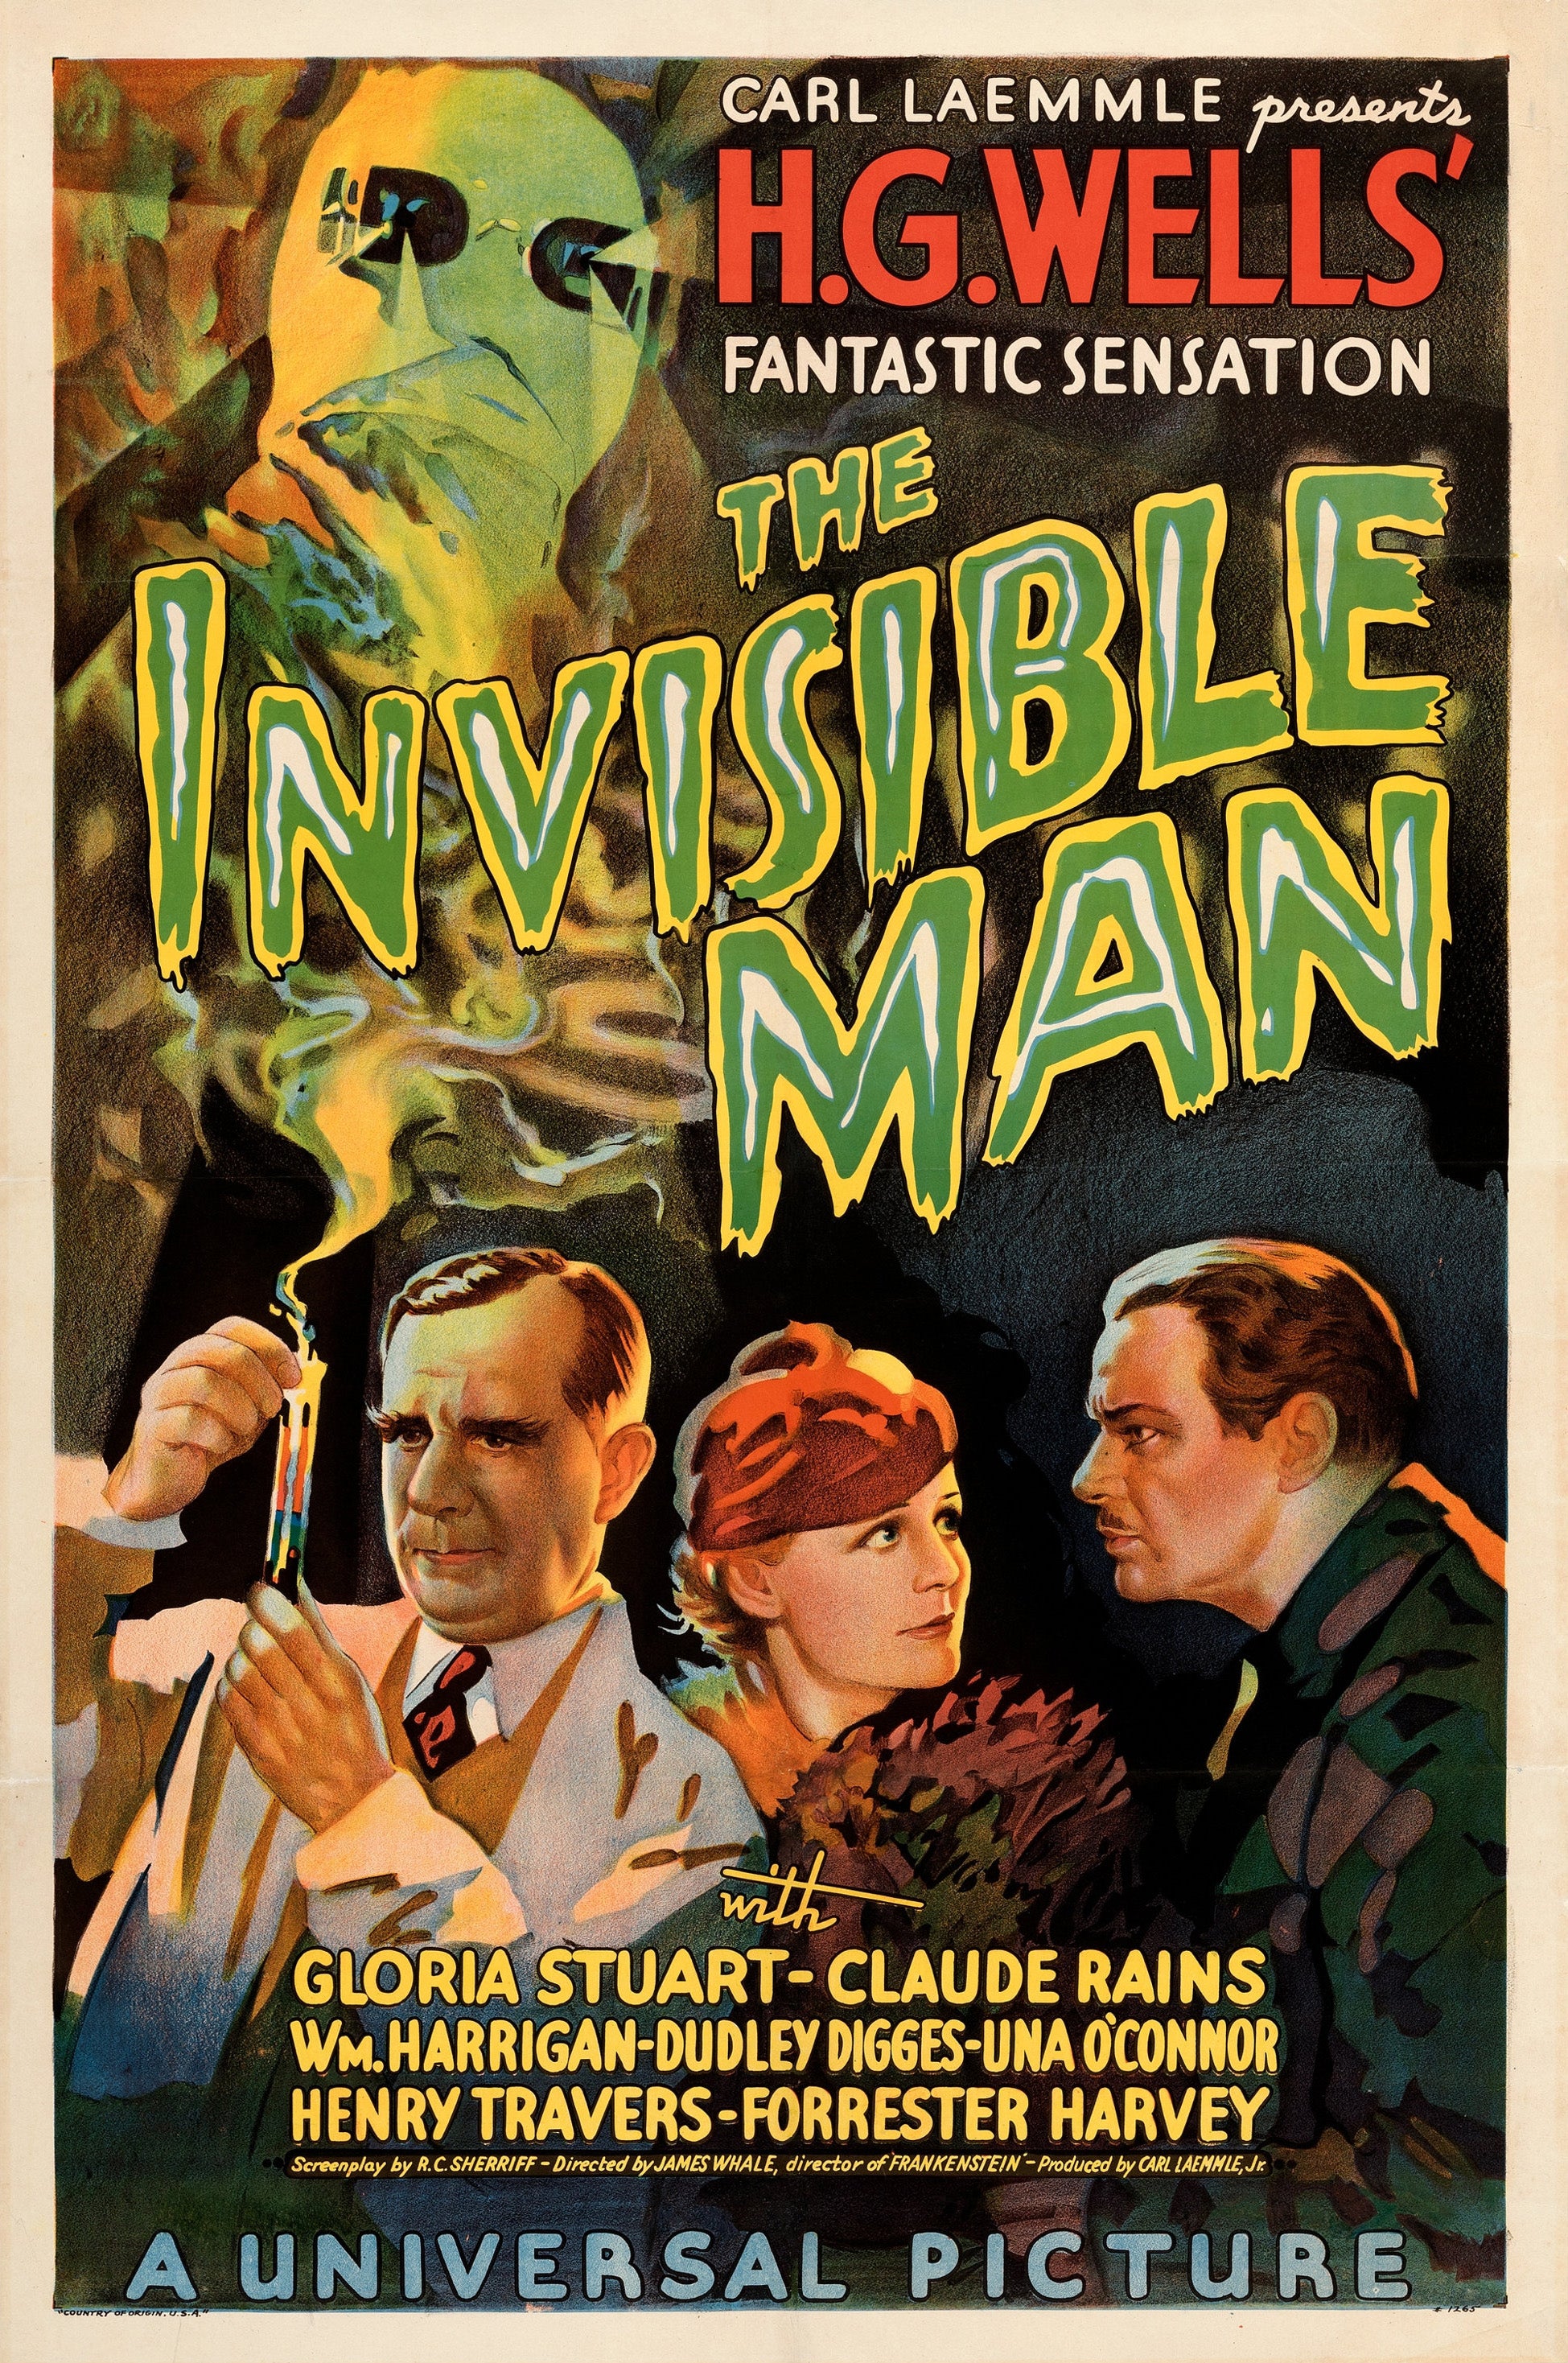 The Invisible Man: H. G. Wells' Fantastic Sensation DVD